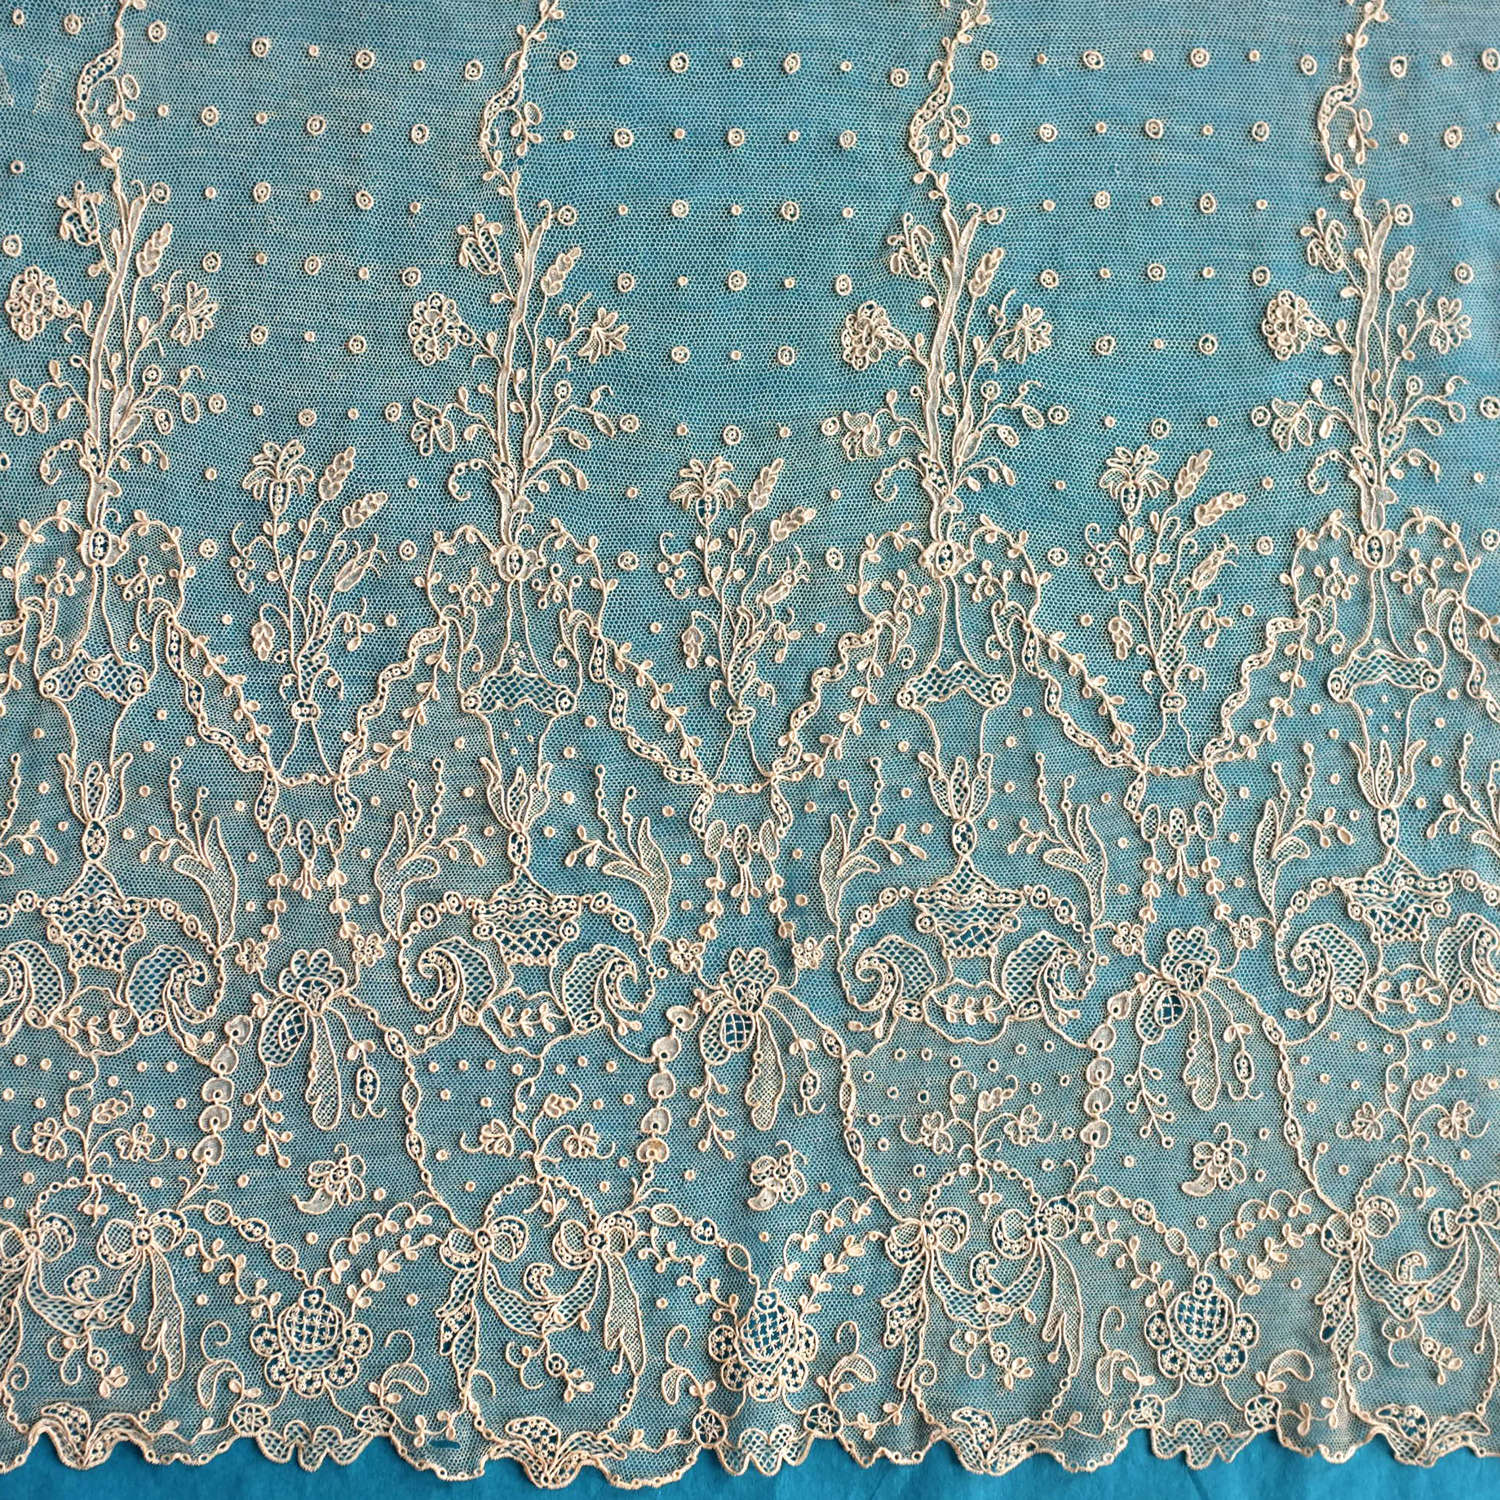 Antique Alençon Lace Panels, late 18th / early 19th Century